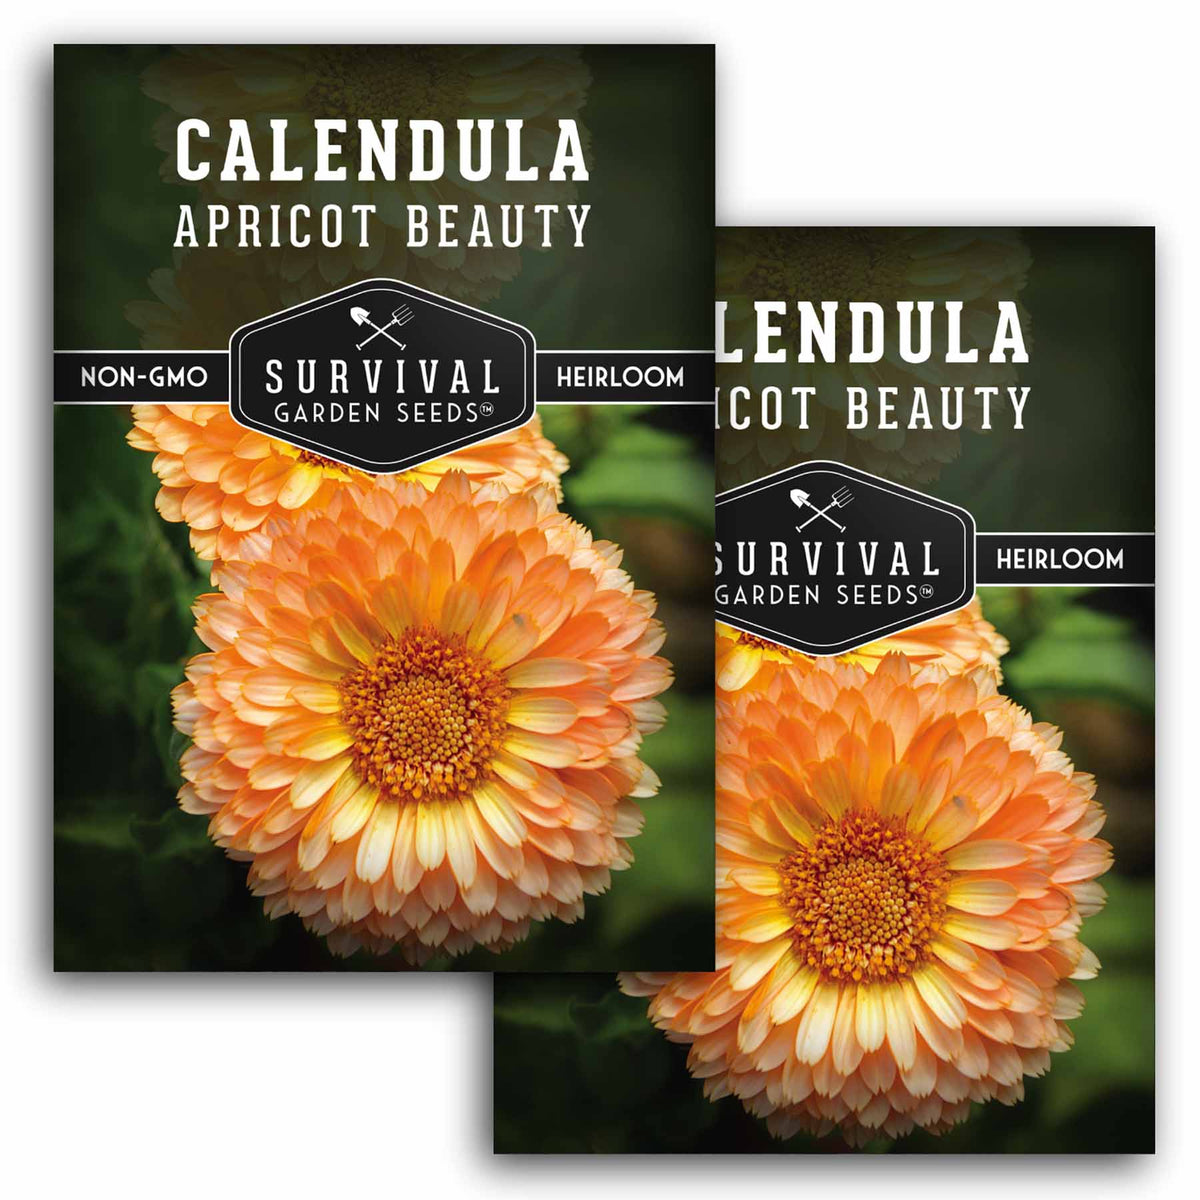 2 packets of Apricot Beauty Calendula seeds